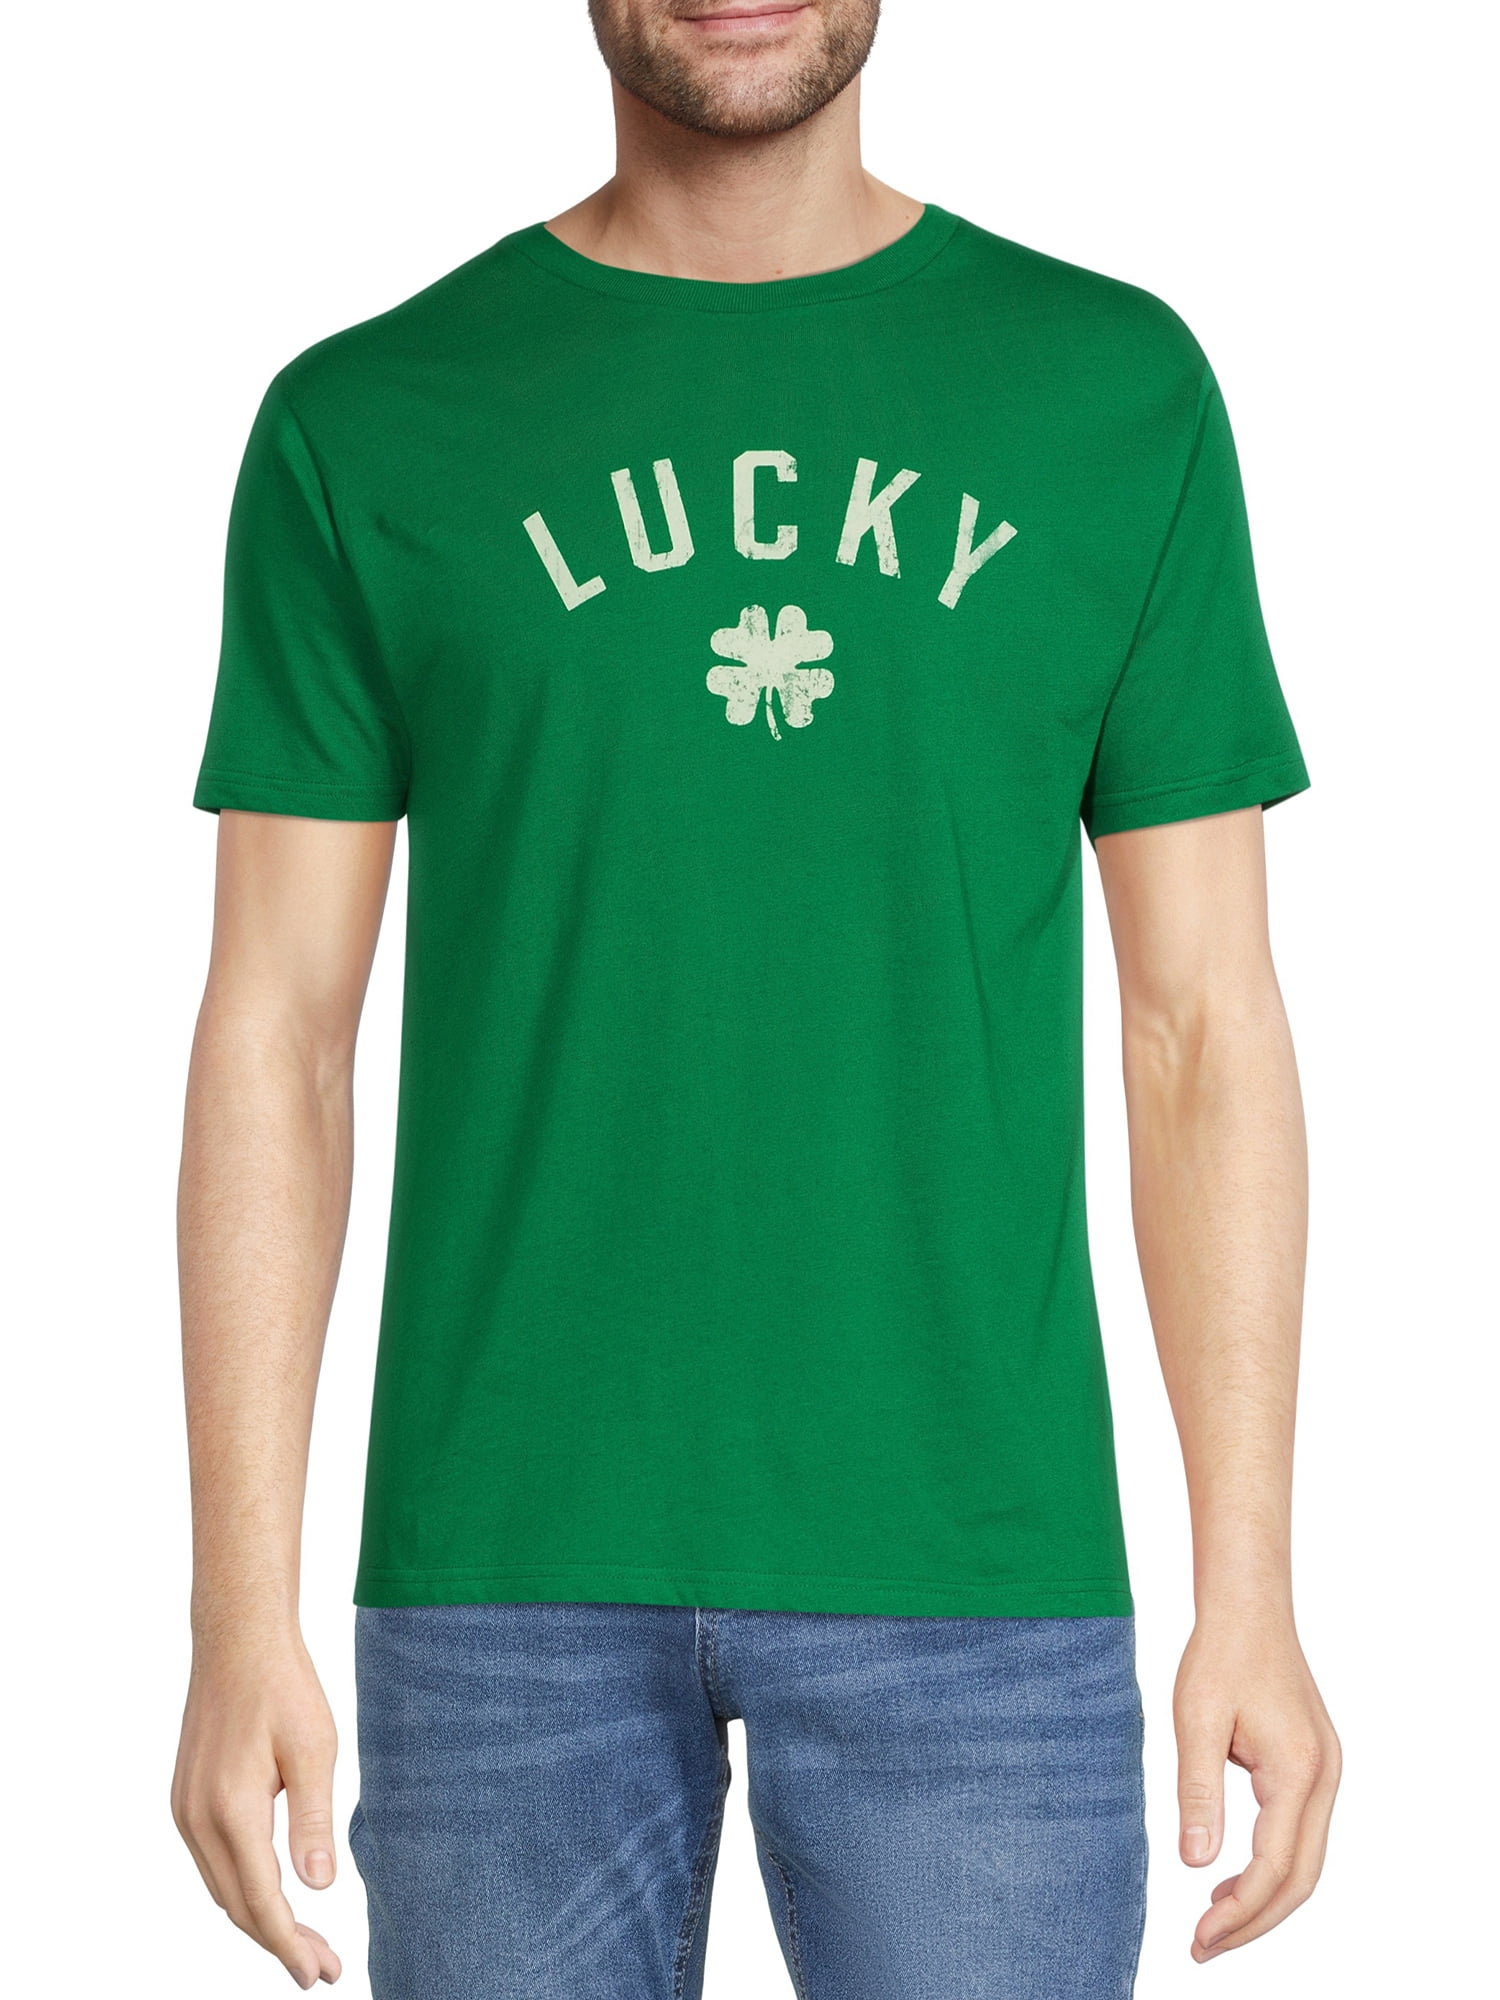 WAY TO CELEBRATE! Saint Patrick’s Day Men’s Lucky Redwing T-Shirt